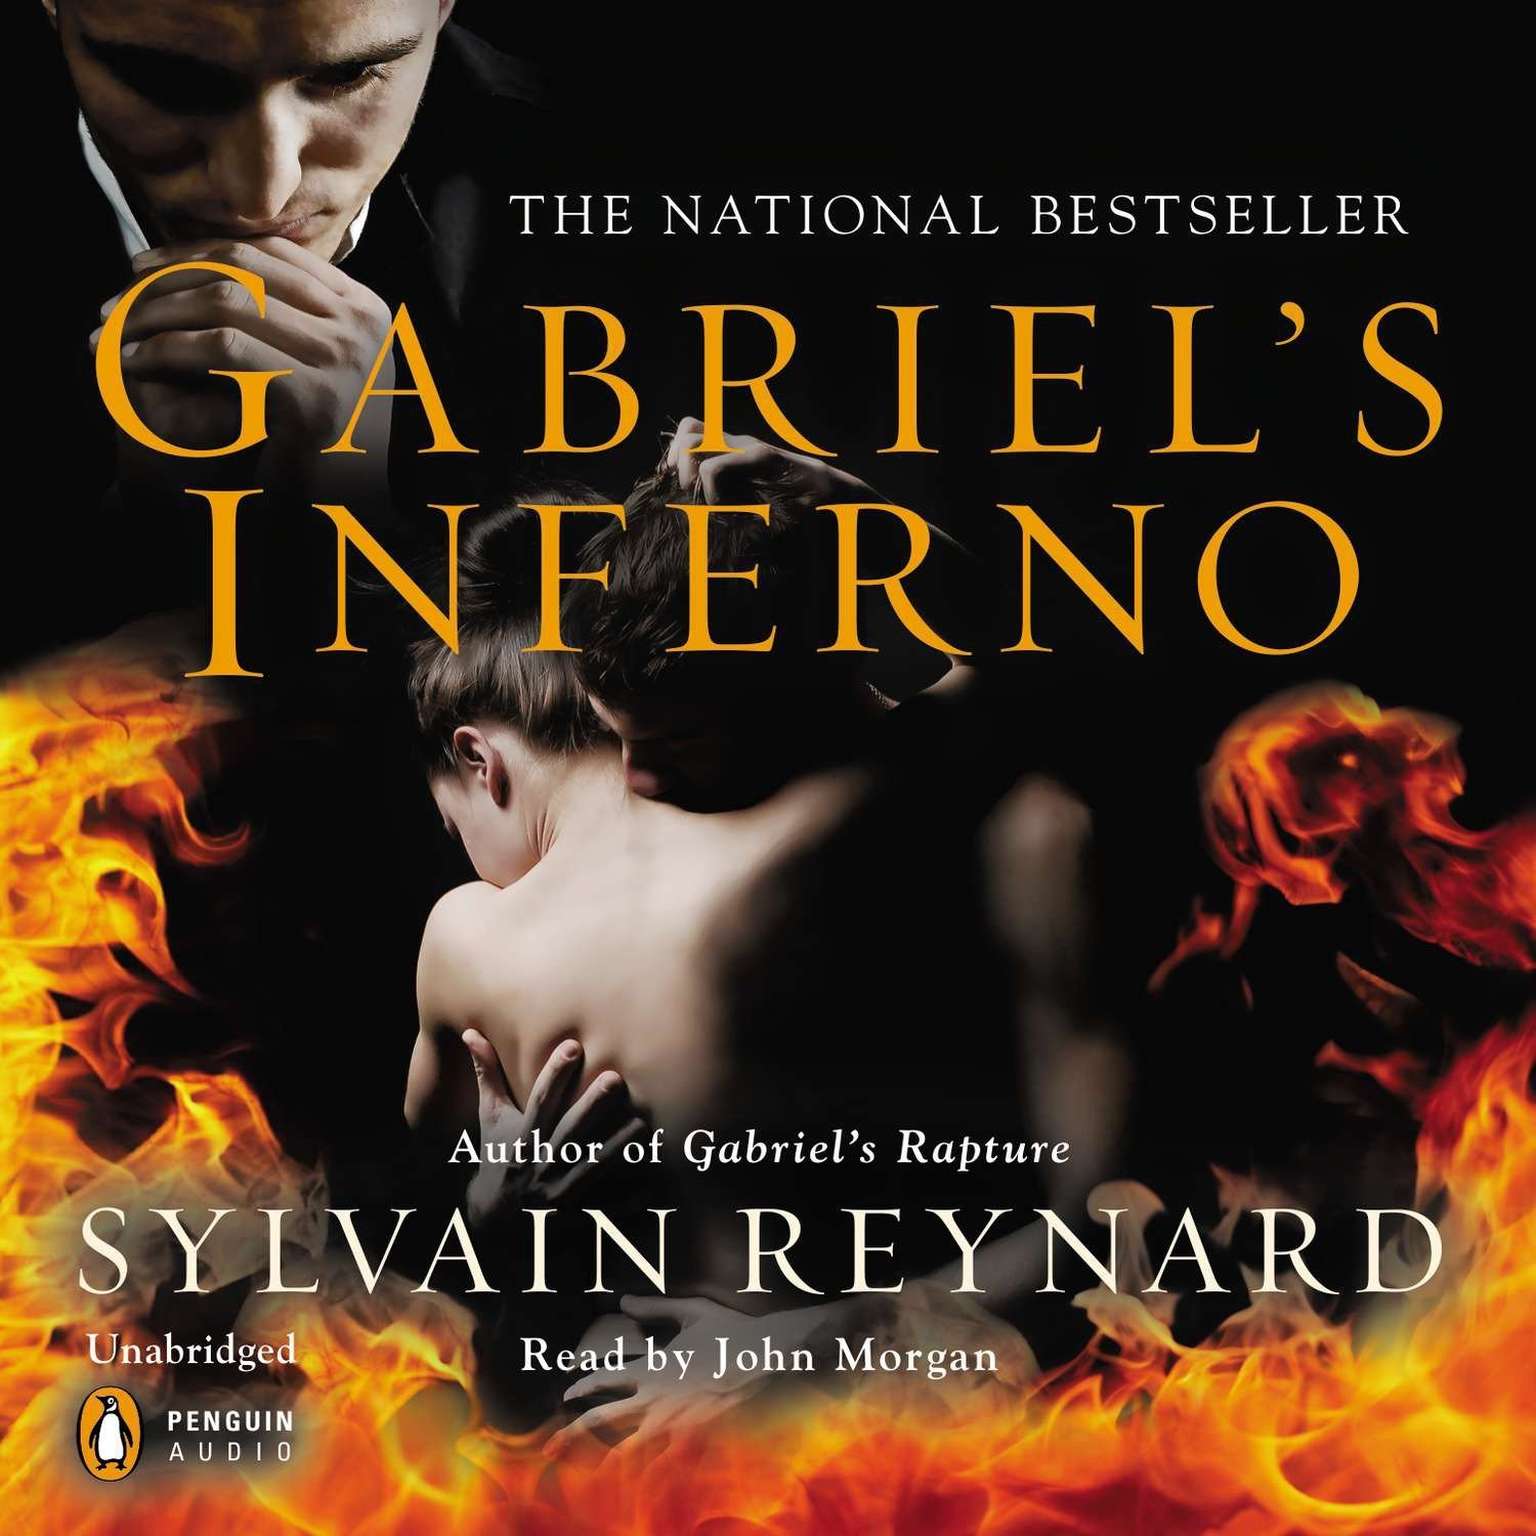 Sylvain Reynard: Gabriel's inferno (2012, Berkley Books)